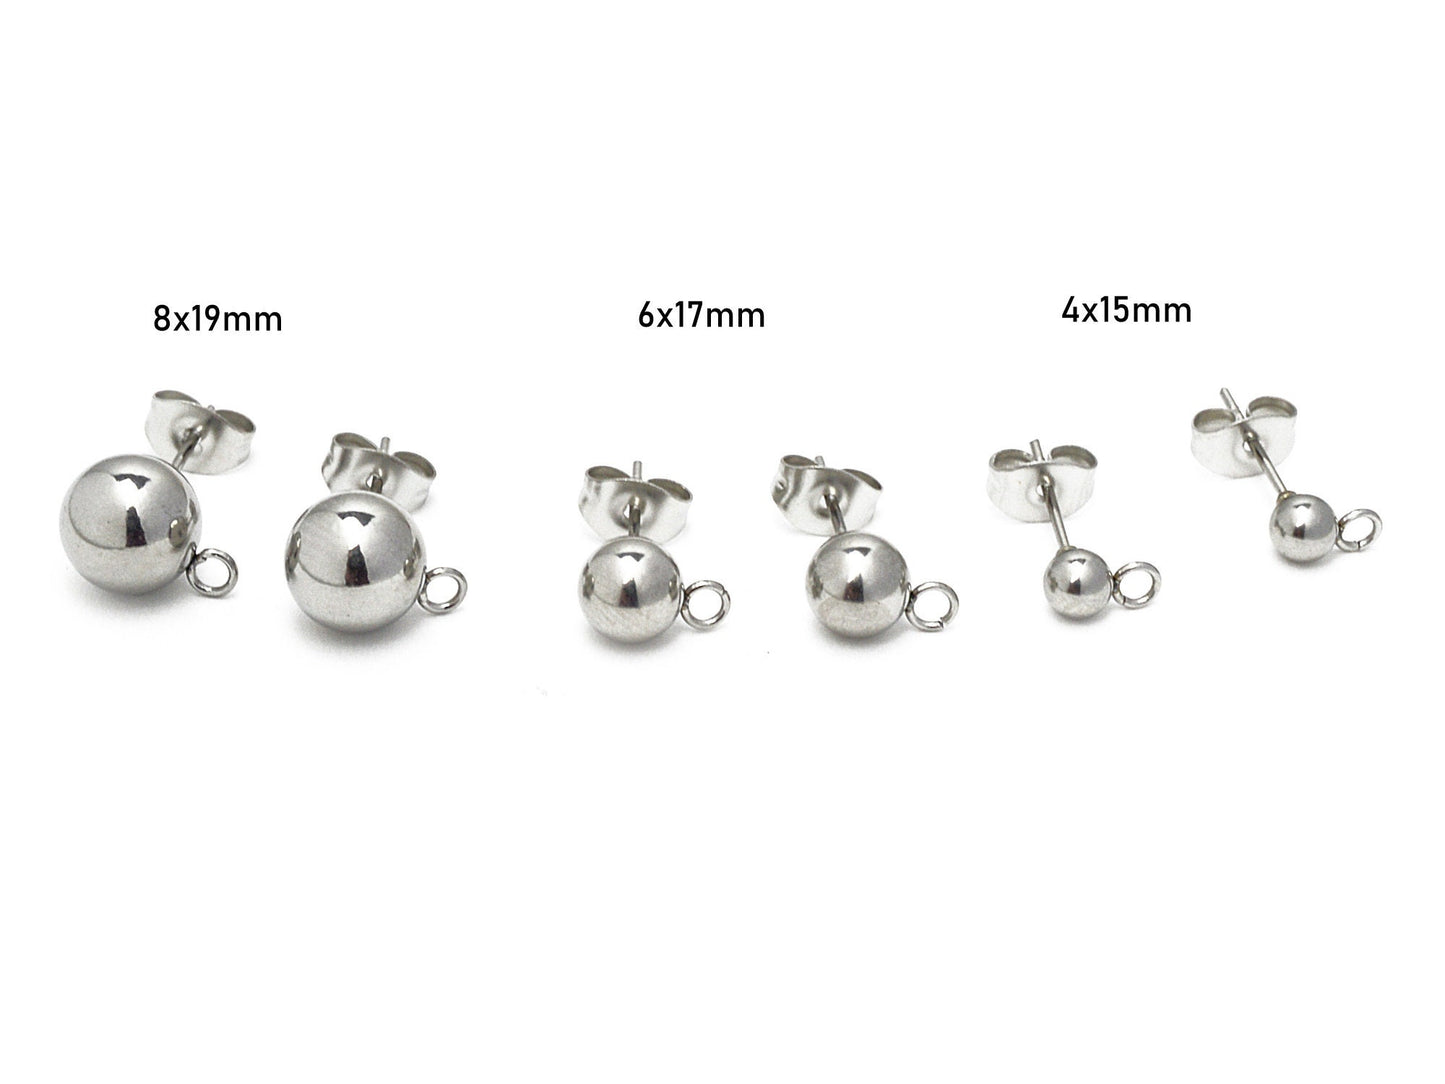 hypoallergenic Stainless Steel Hook Earring Wire Coil / Lever Back / Ball Stud Earrings / Flat Stud Earrings Findings For Jewelry Supplier